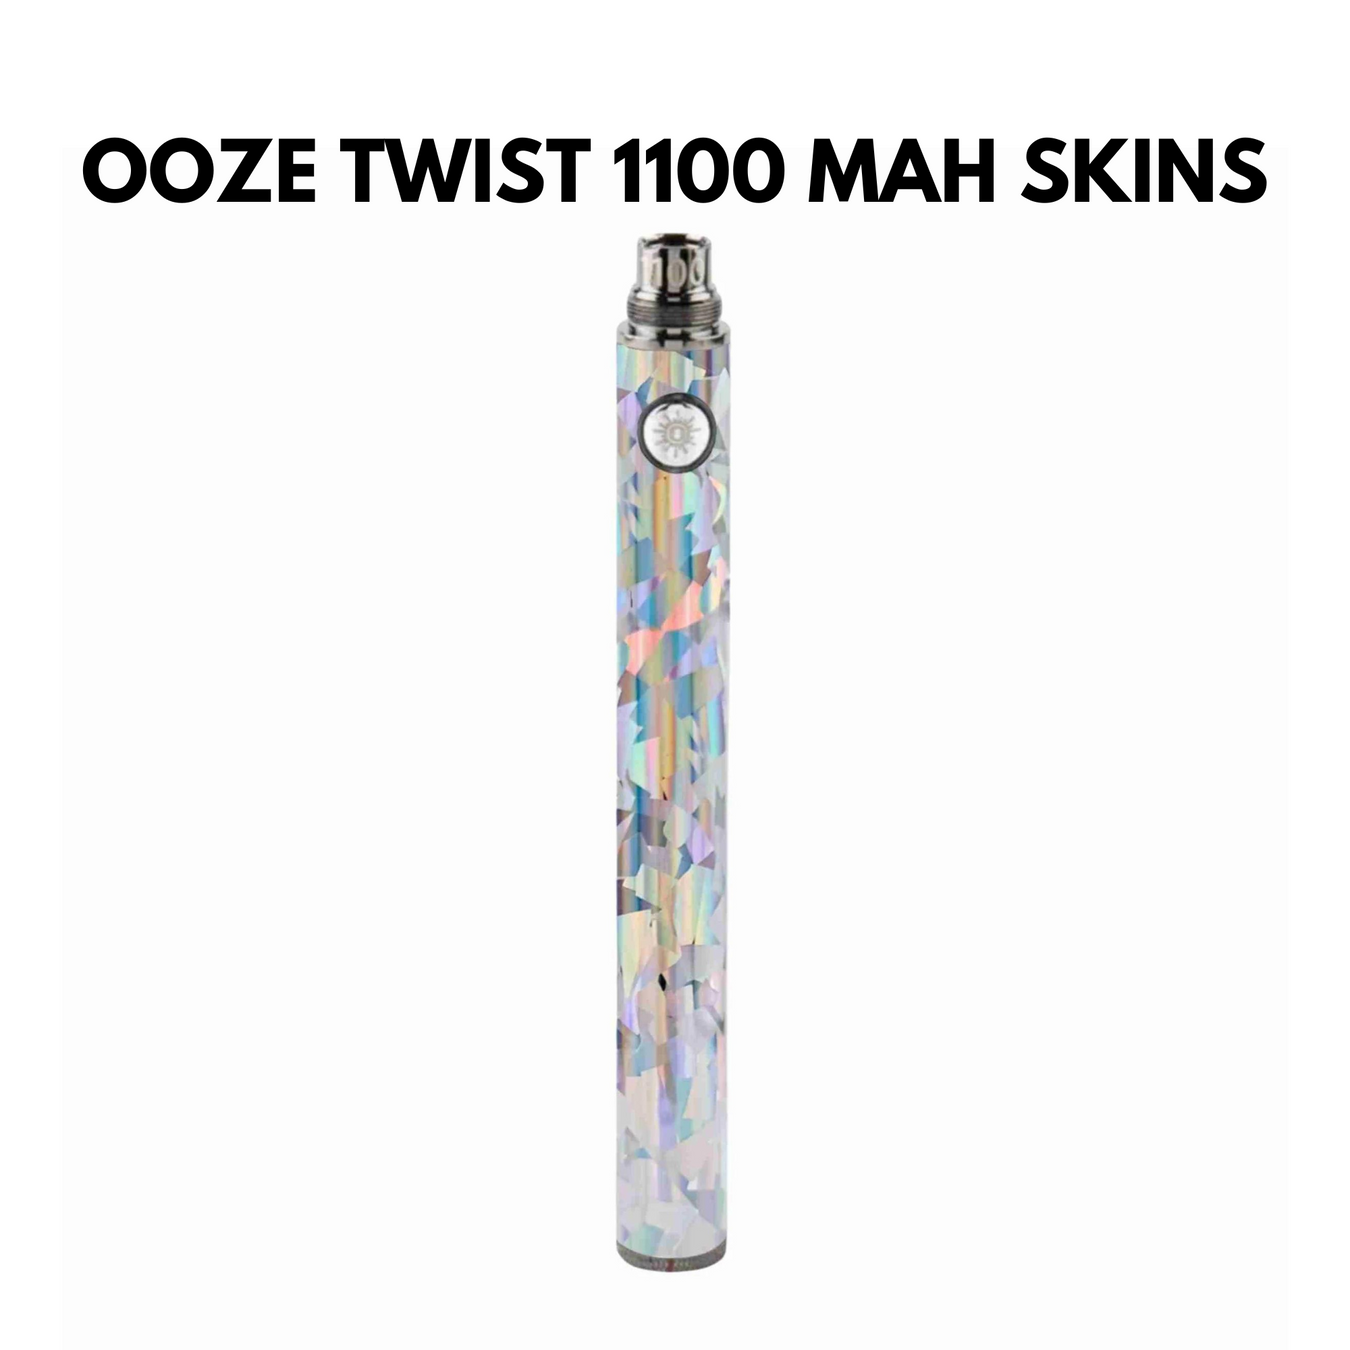 Ooze Twist 1100 mAh Skins